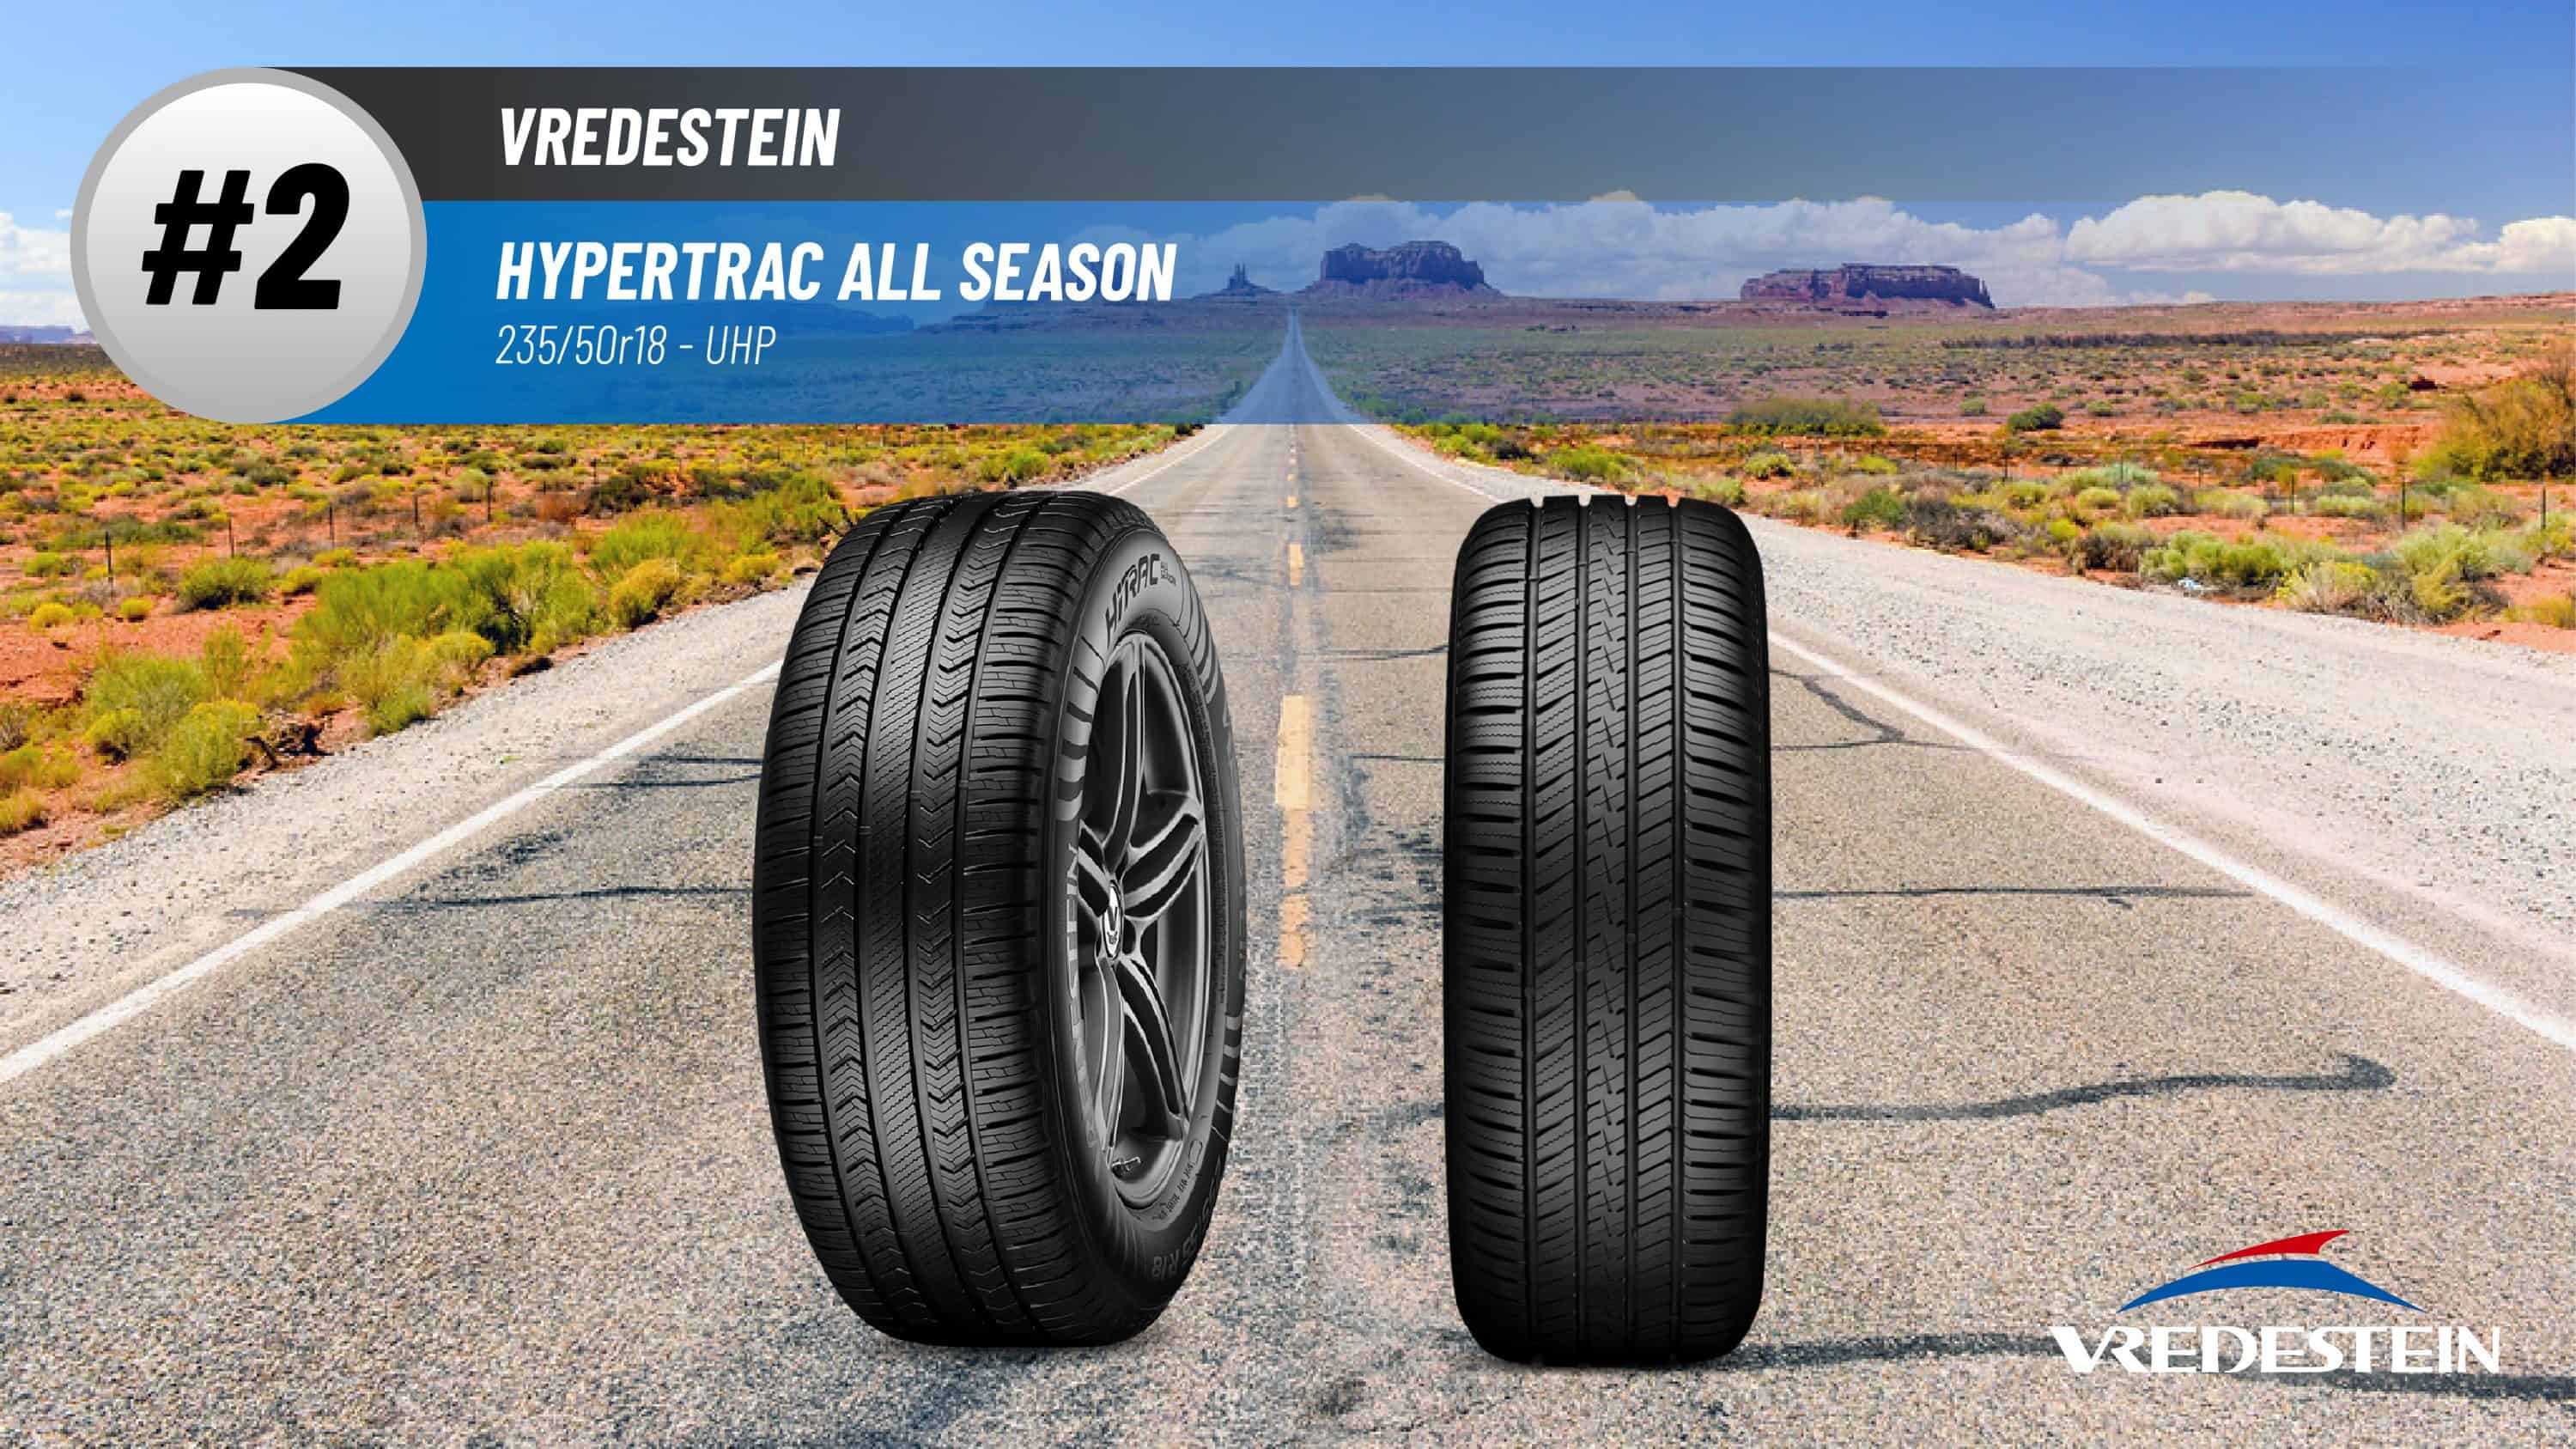 Top #2 UHP Tires: Vredestein HyperTrac All Season –best 235/50r18